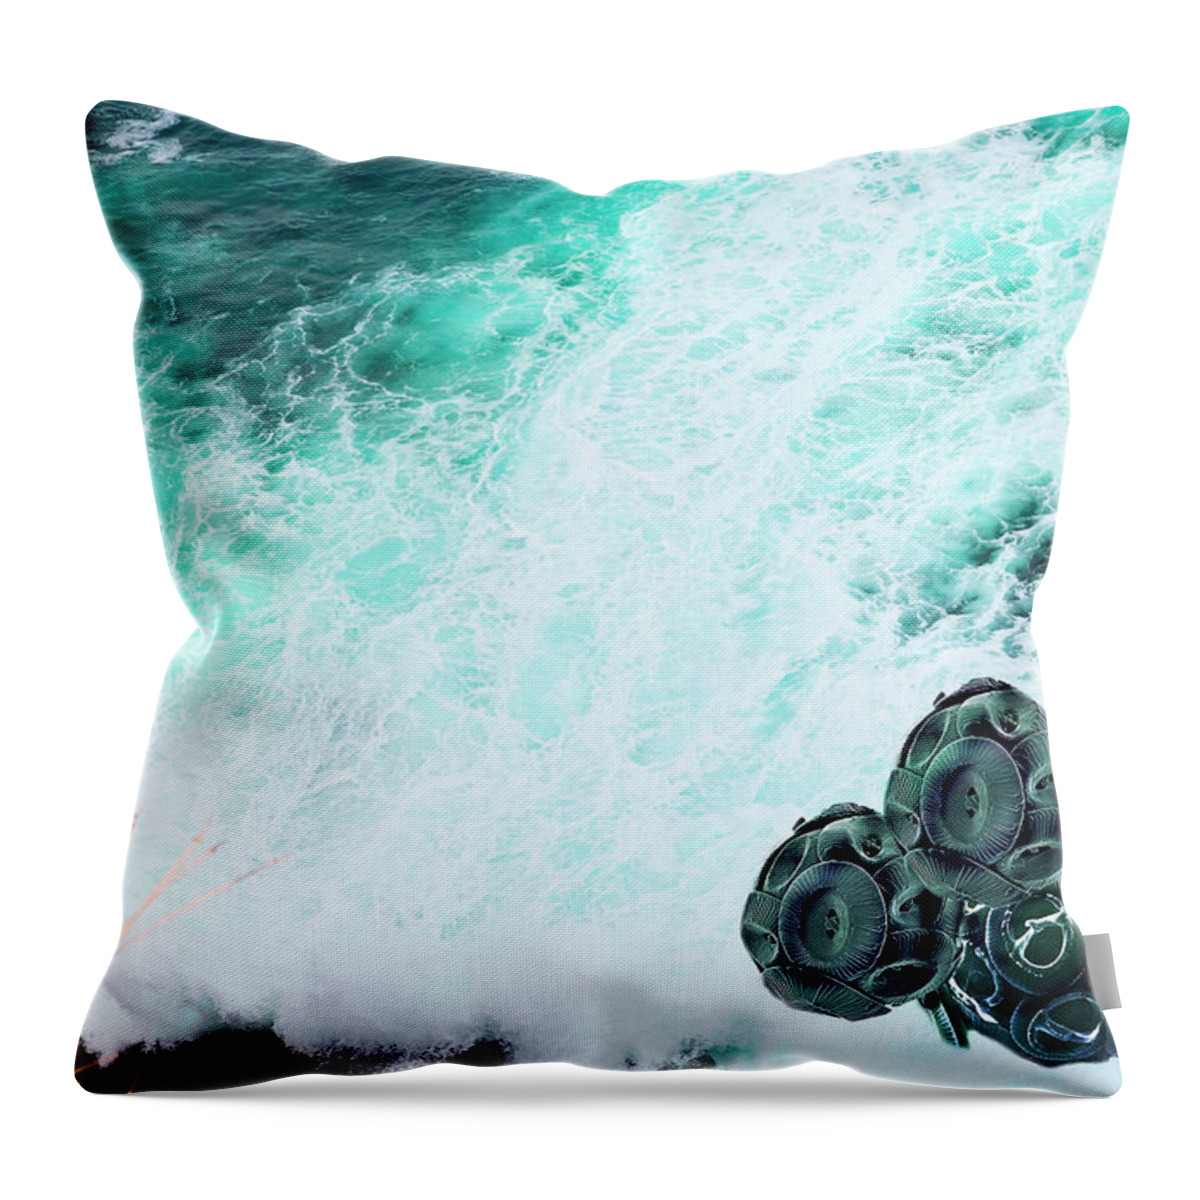 Ocean Throw Pillow featuring the photograph Coccolithophores by Miroslava Jurcik